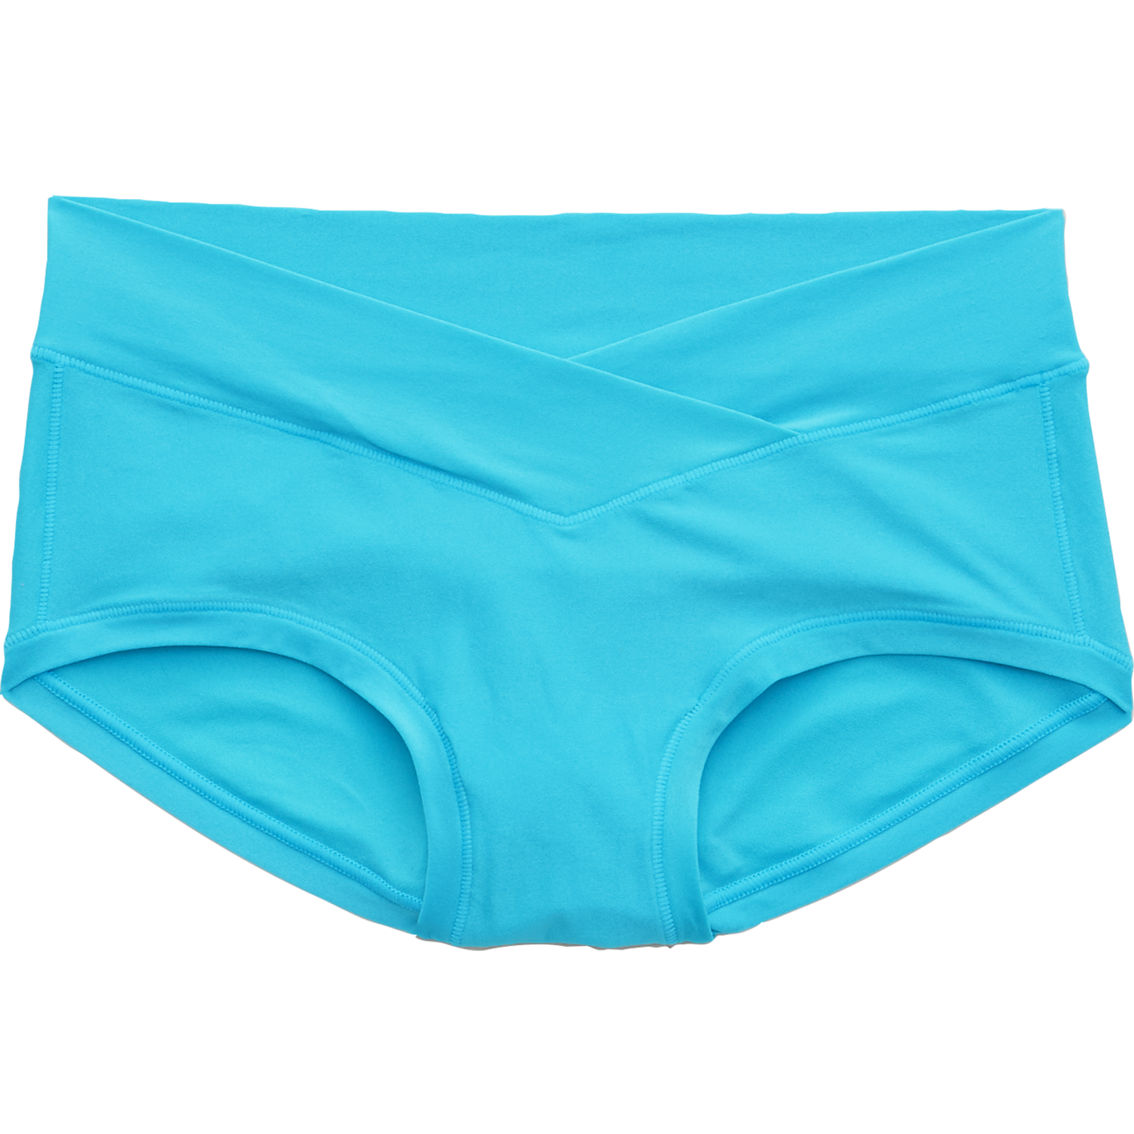 Aerie Real Me Crossover Boybrief Underwear | Panties | Clothing ...